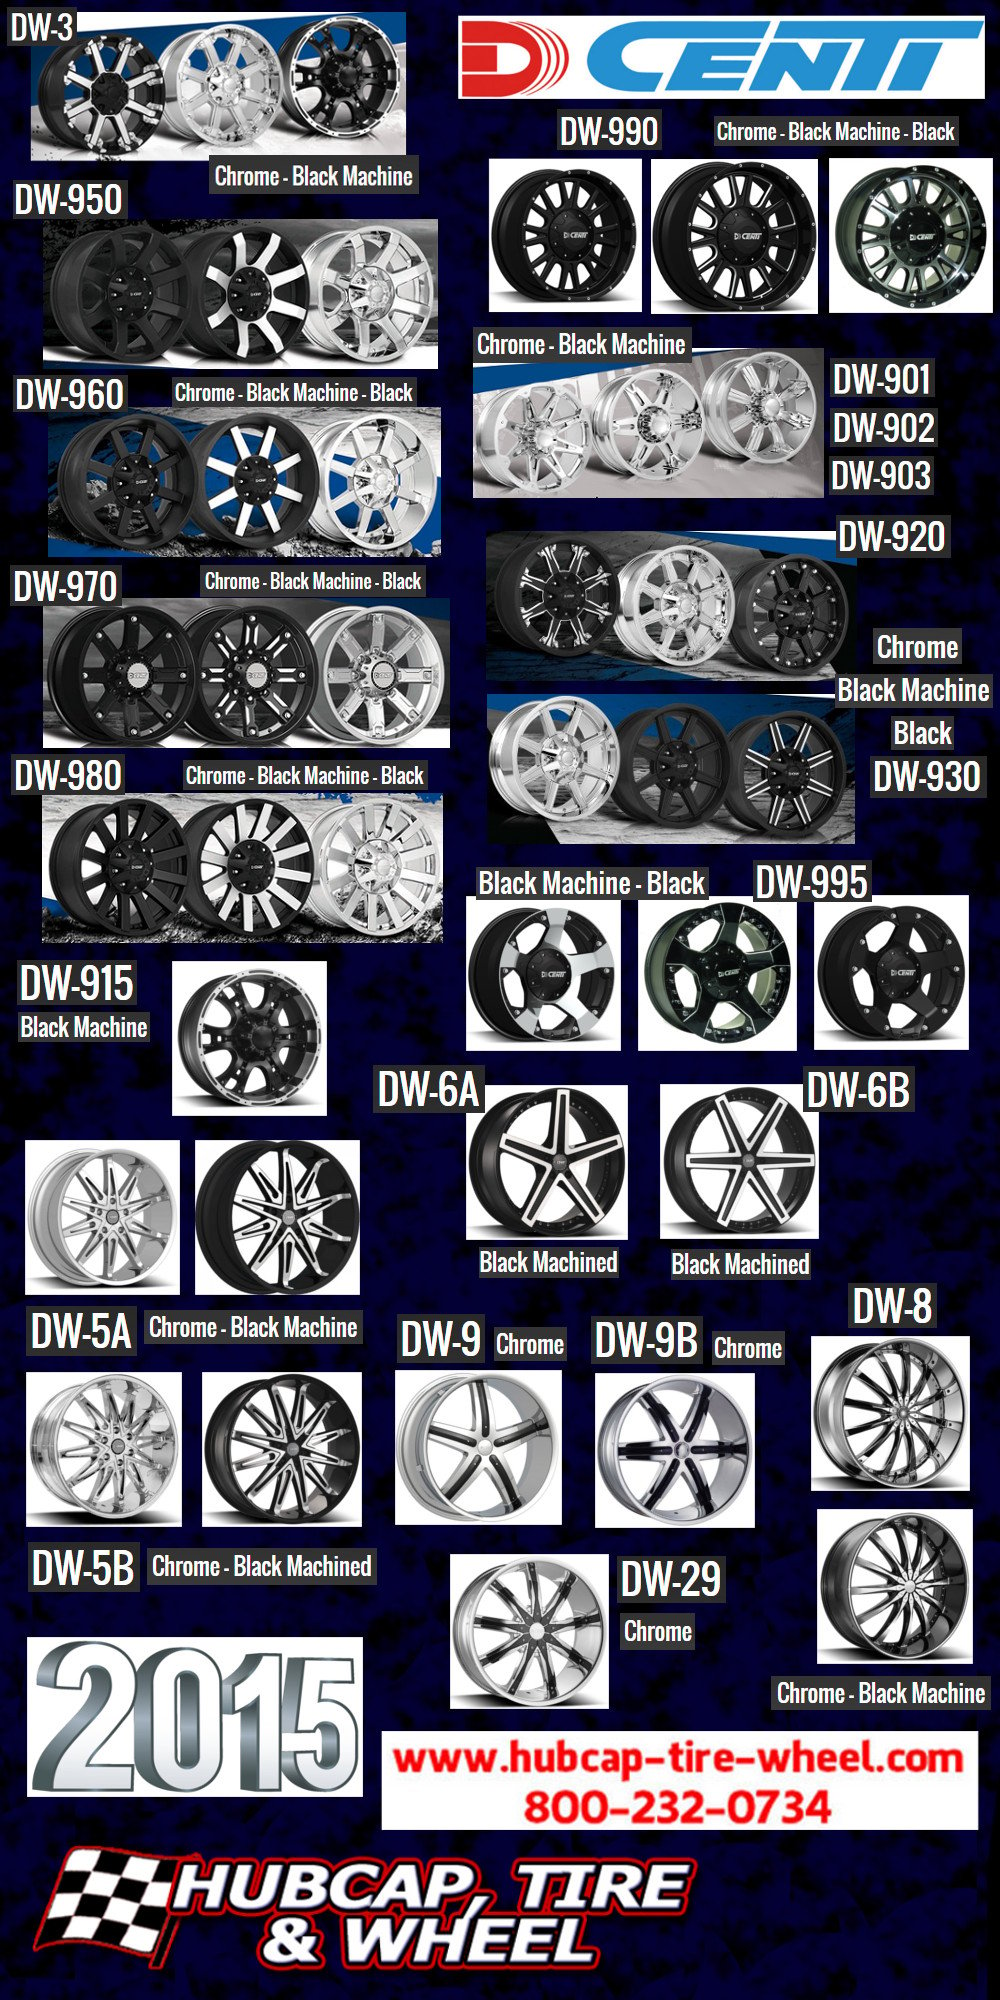 new 2015 dcenti wheels rims